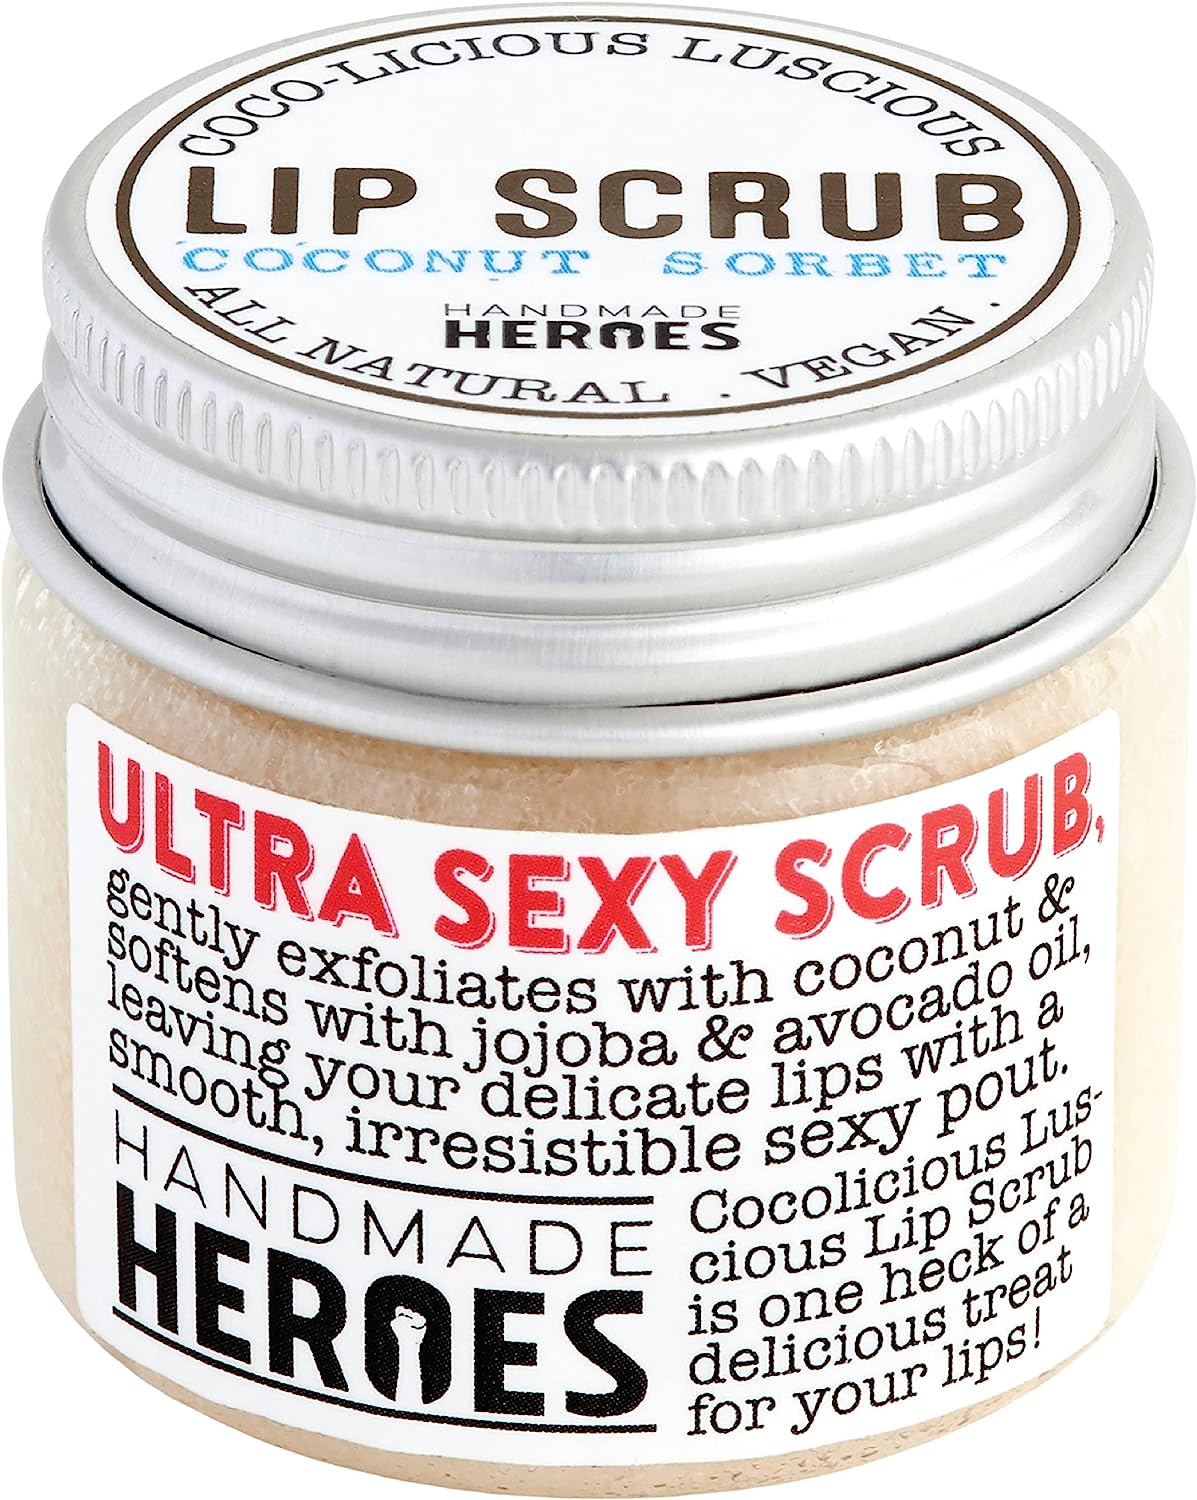 100% Natural Lip Scrub